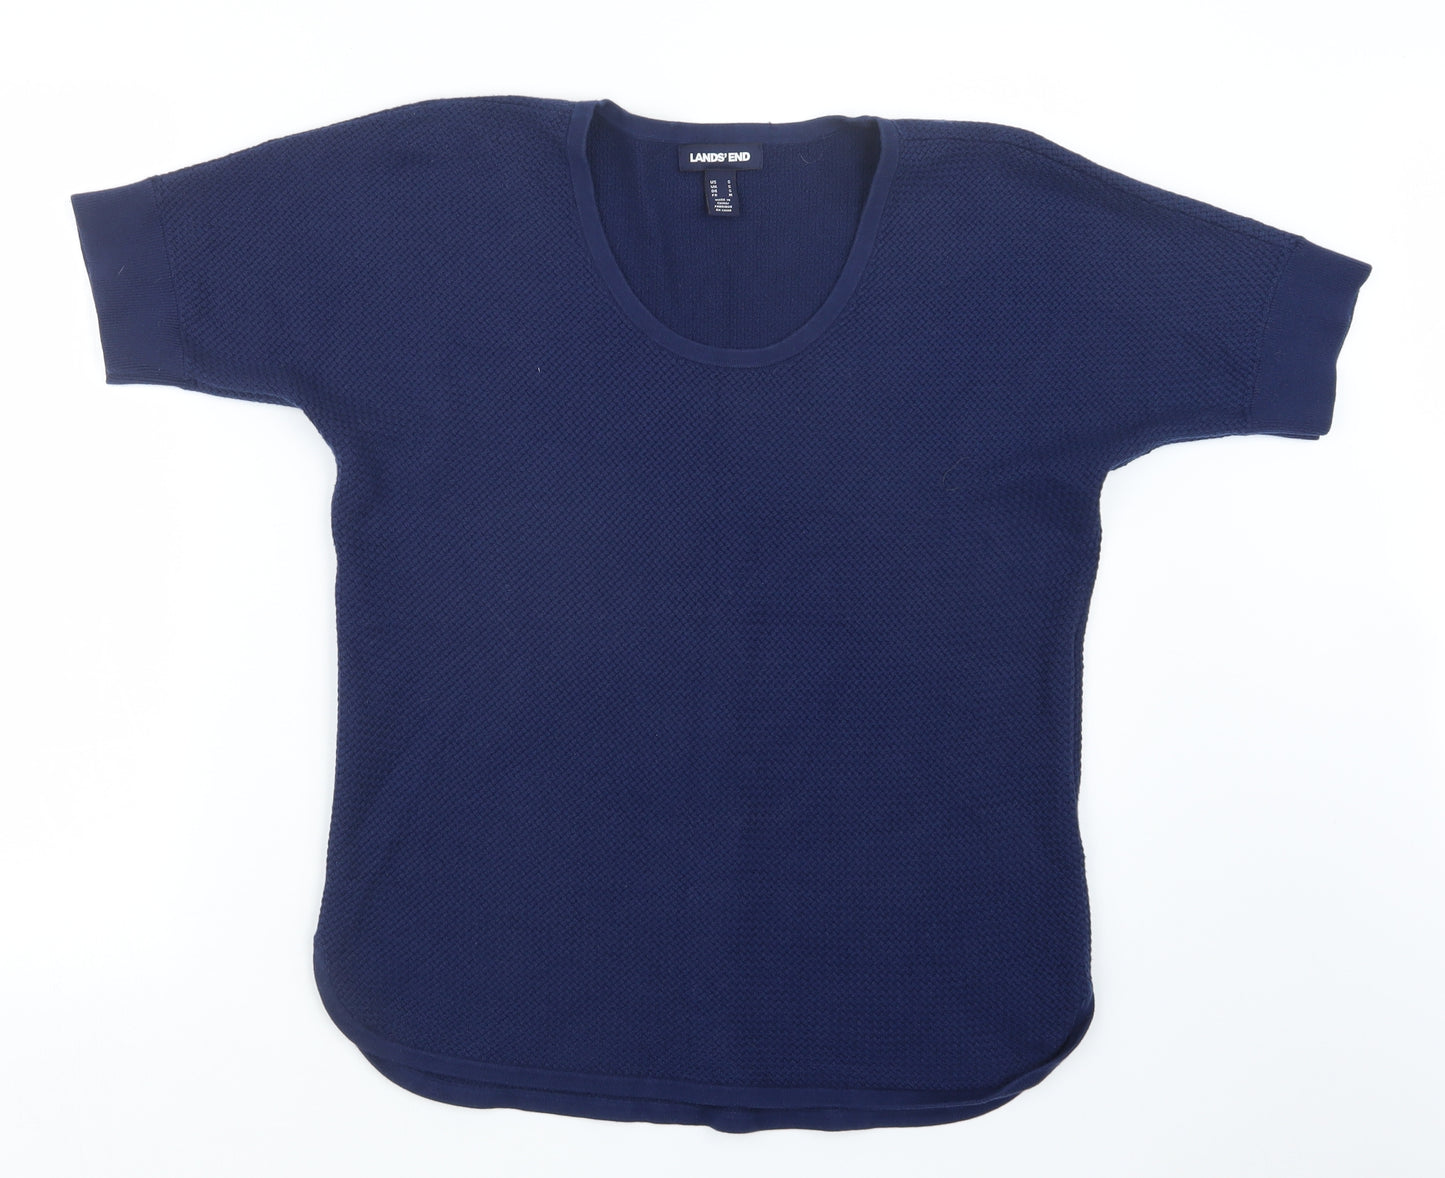 Lands' End Womens Blue  Knit Pullover Jumper Size S